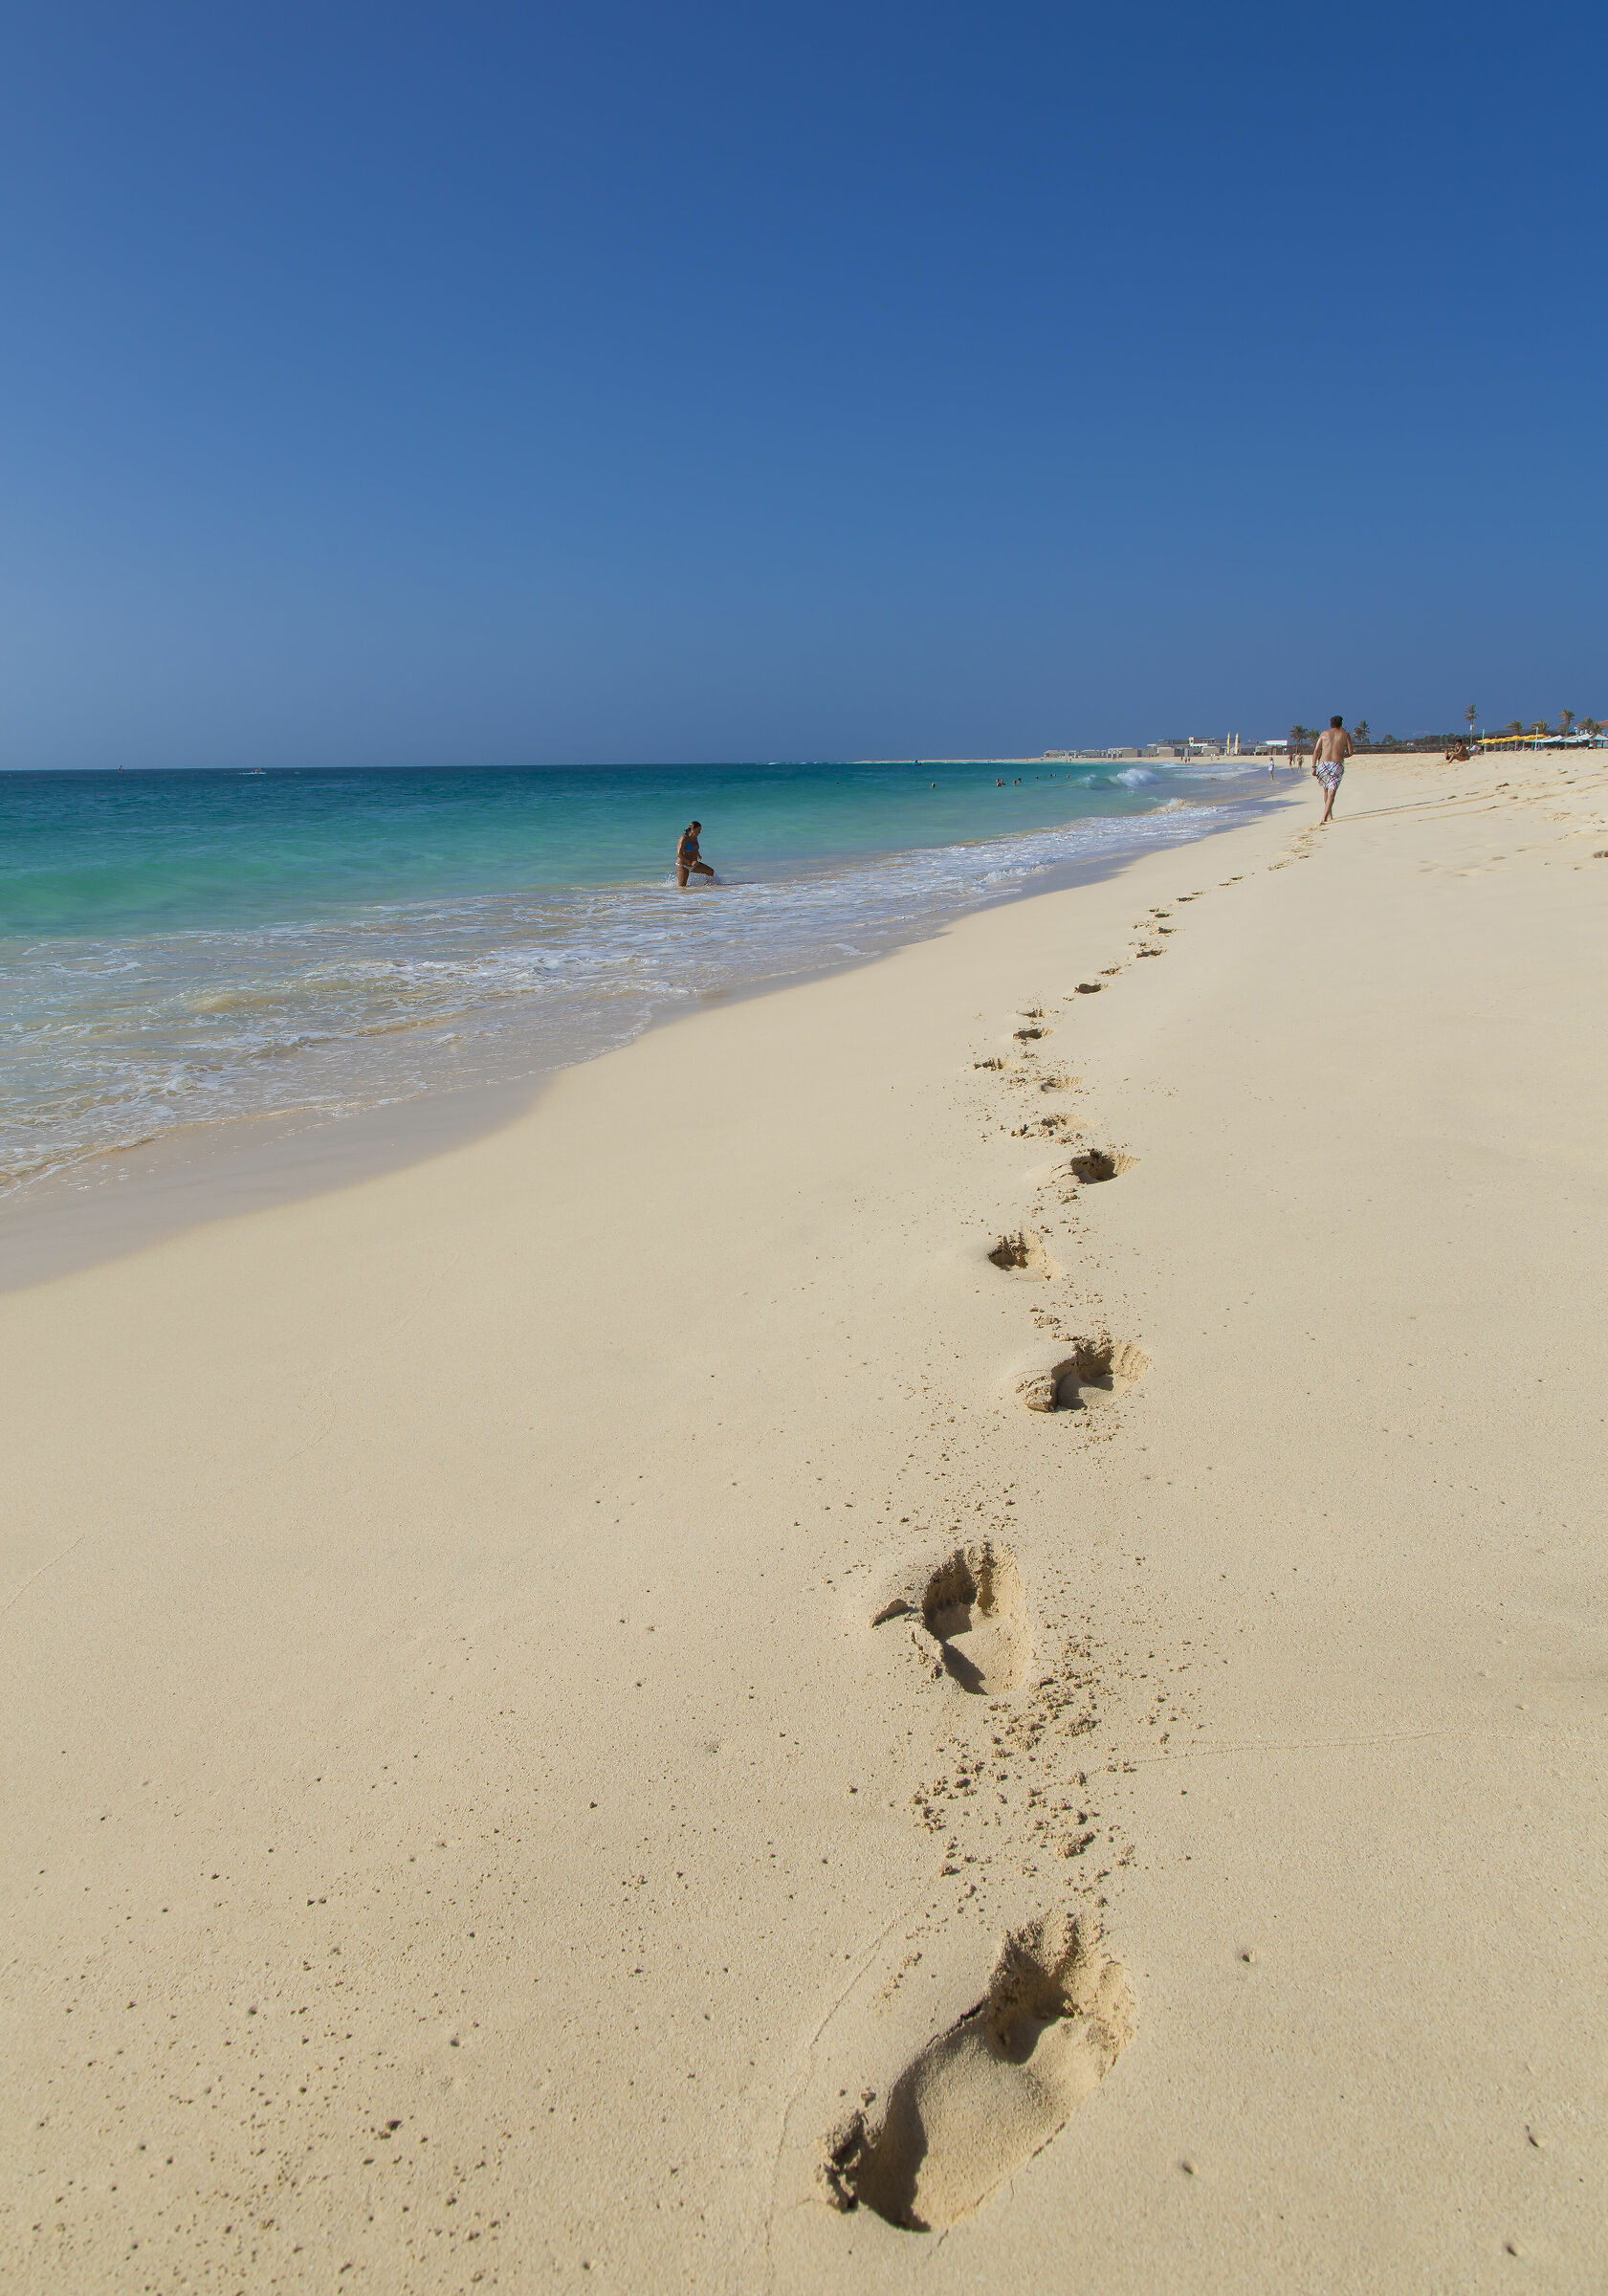 Walk on the beach in Cape Verde...